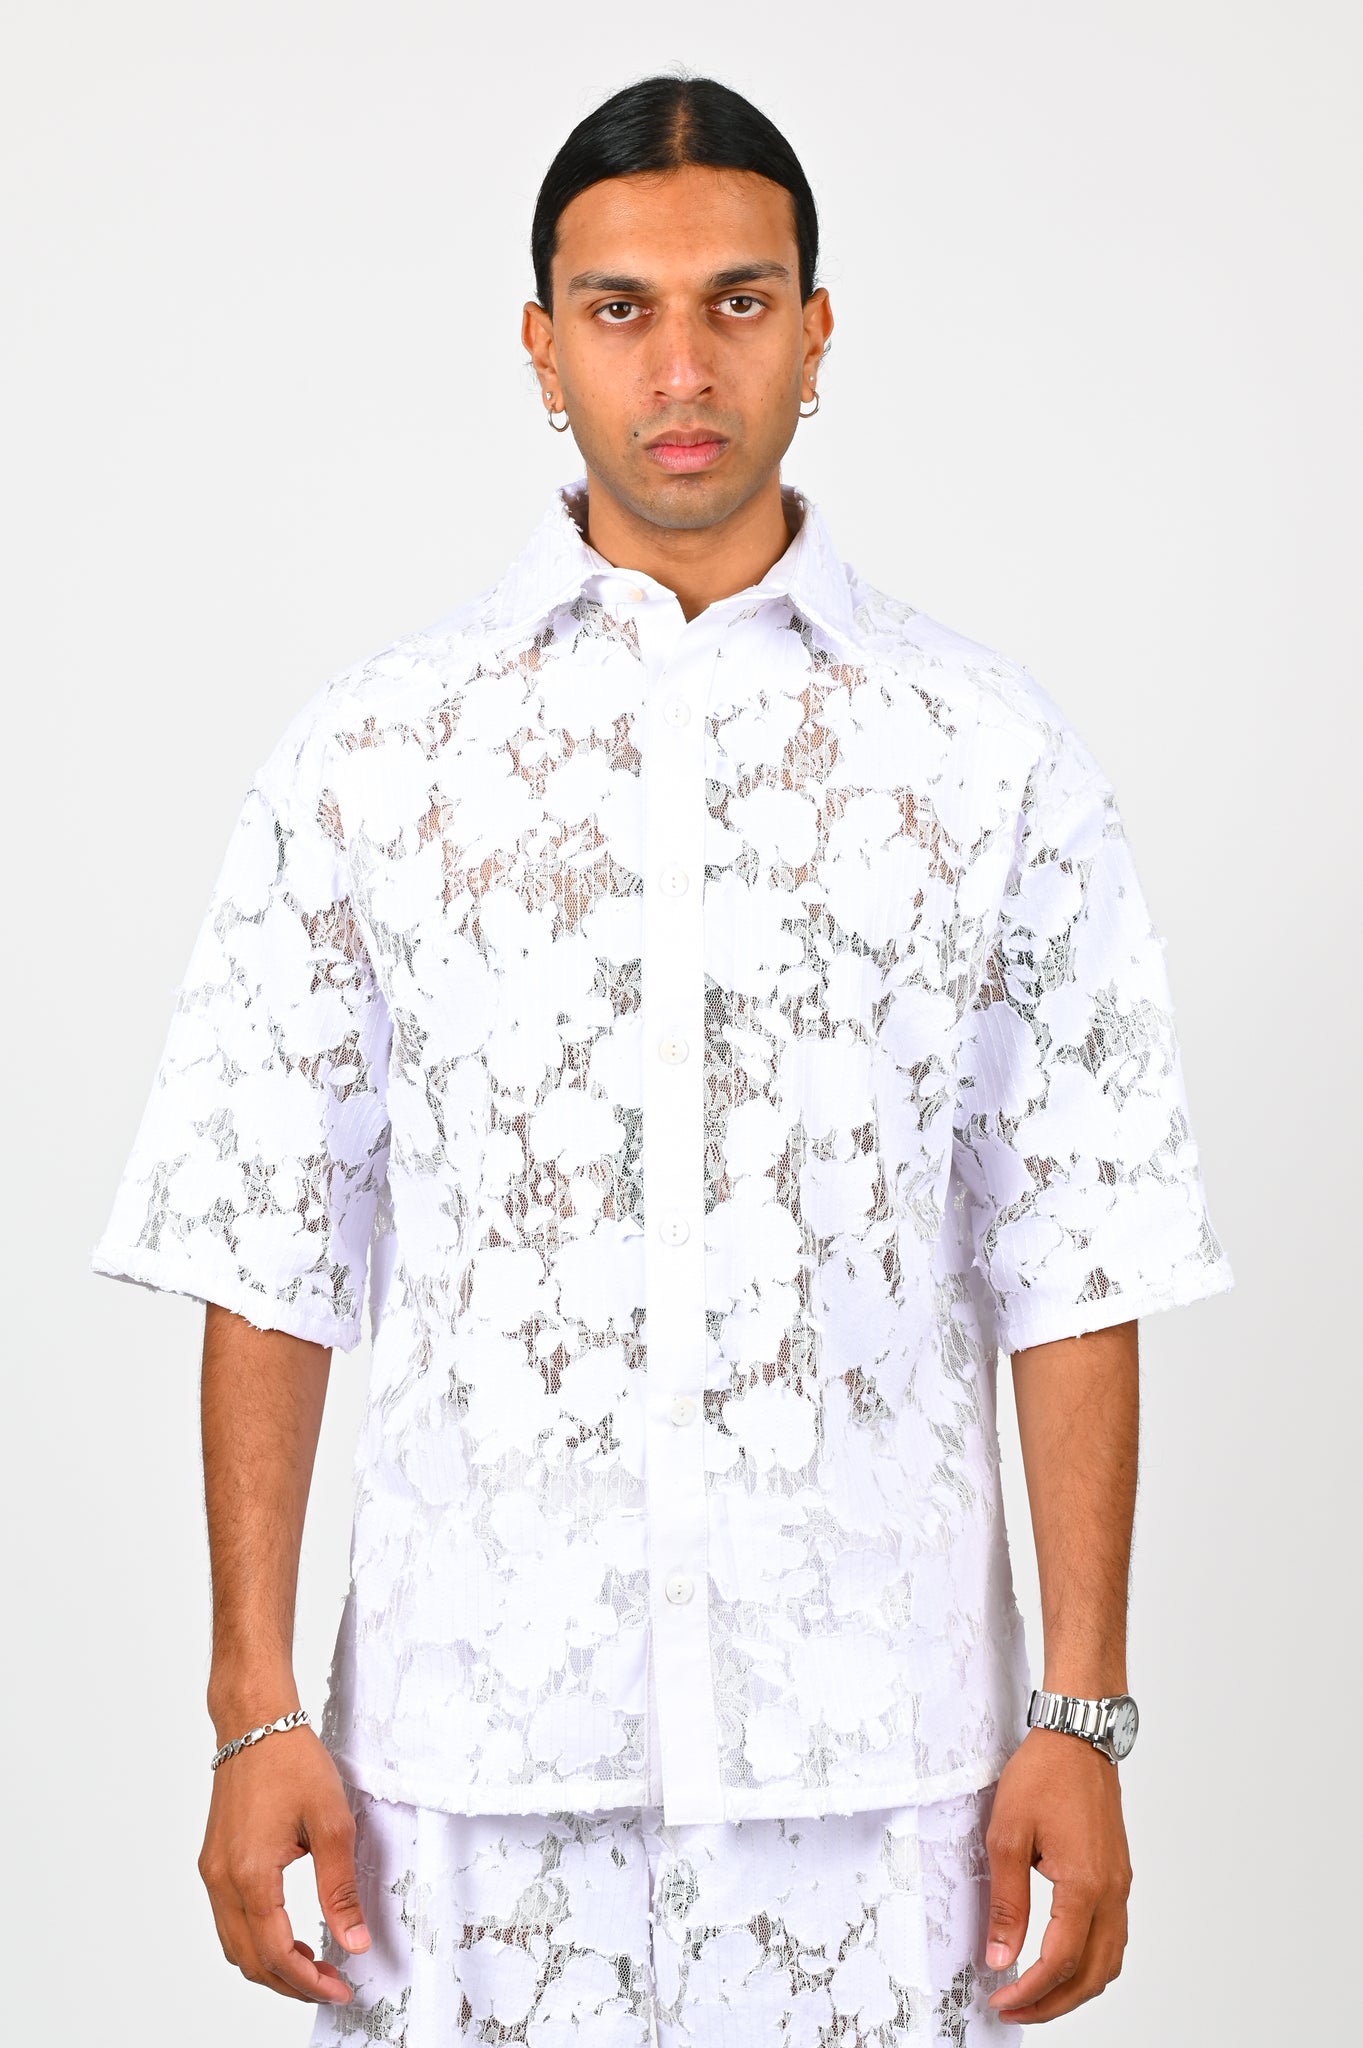 Erik Yvon Lace Shirt in White